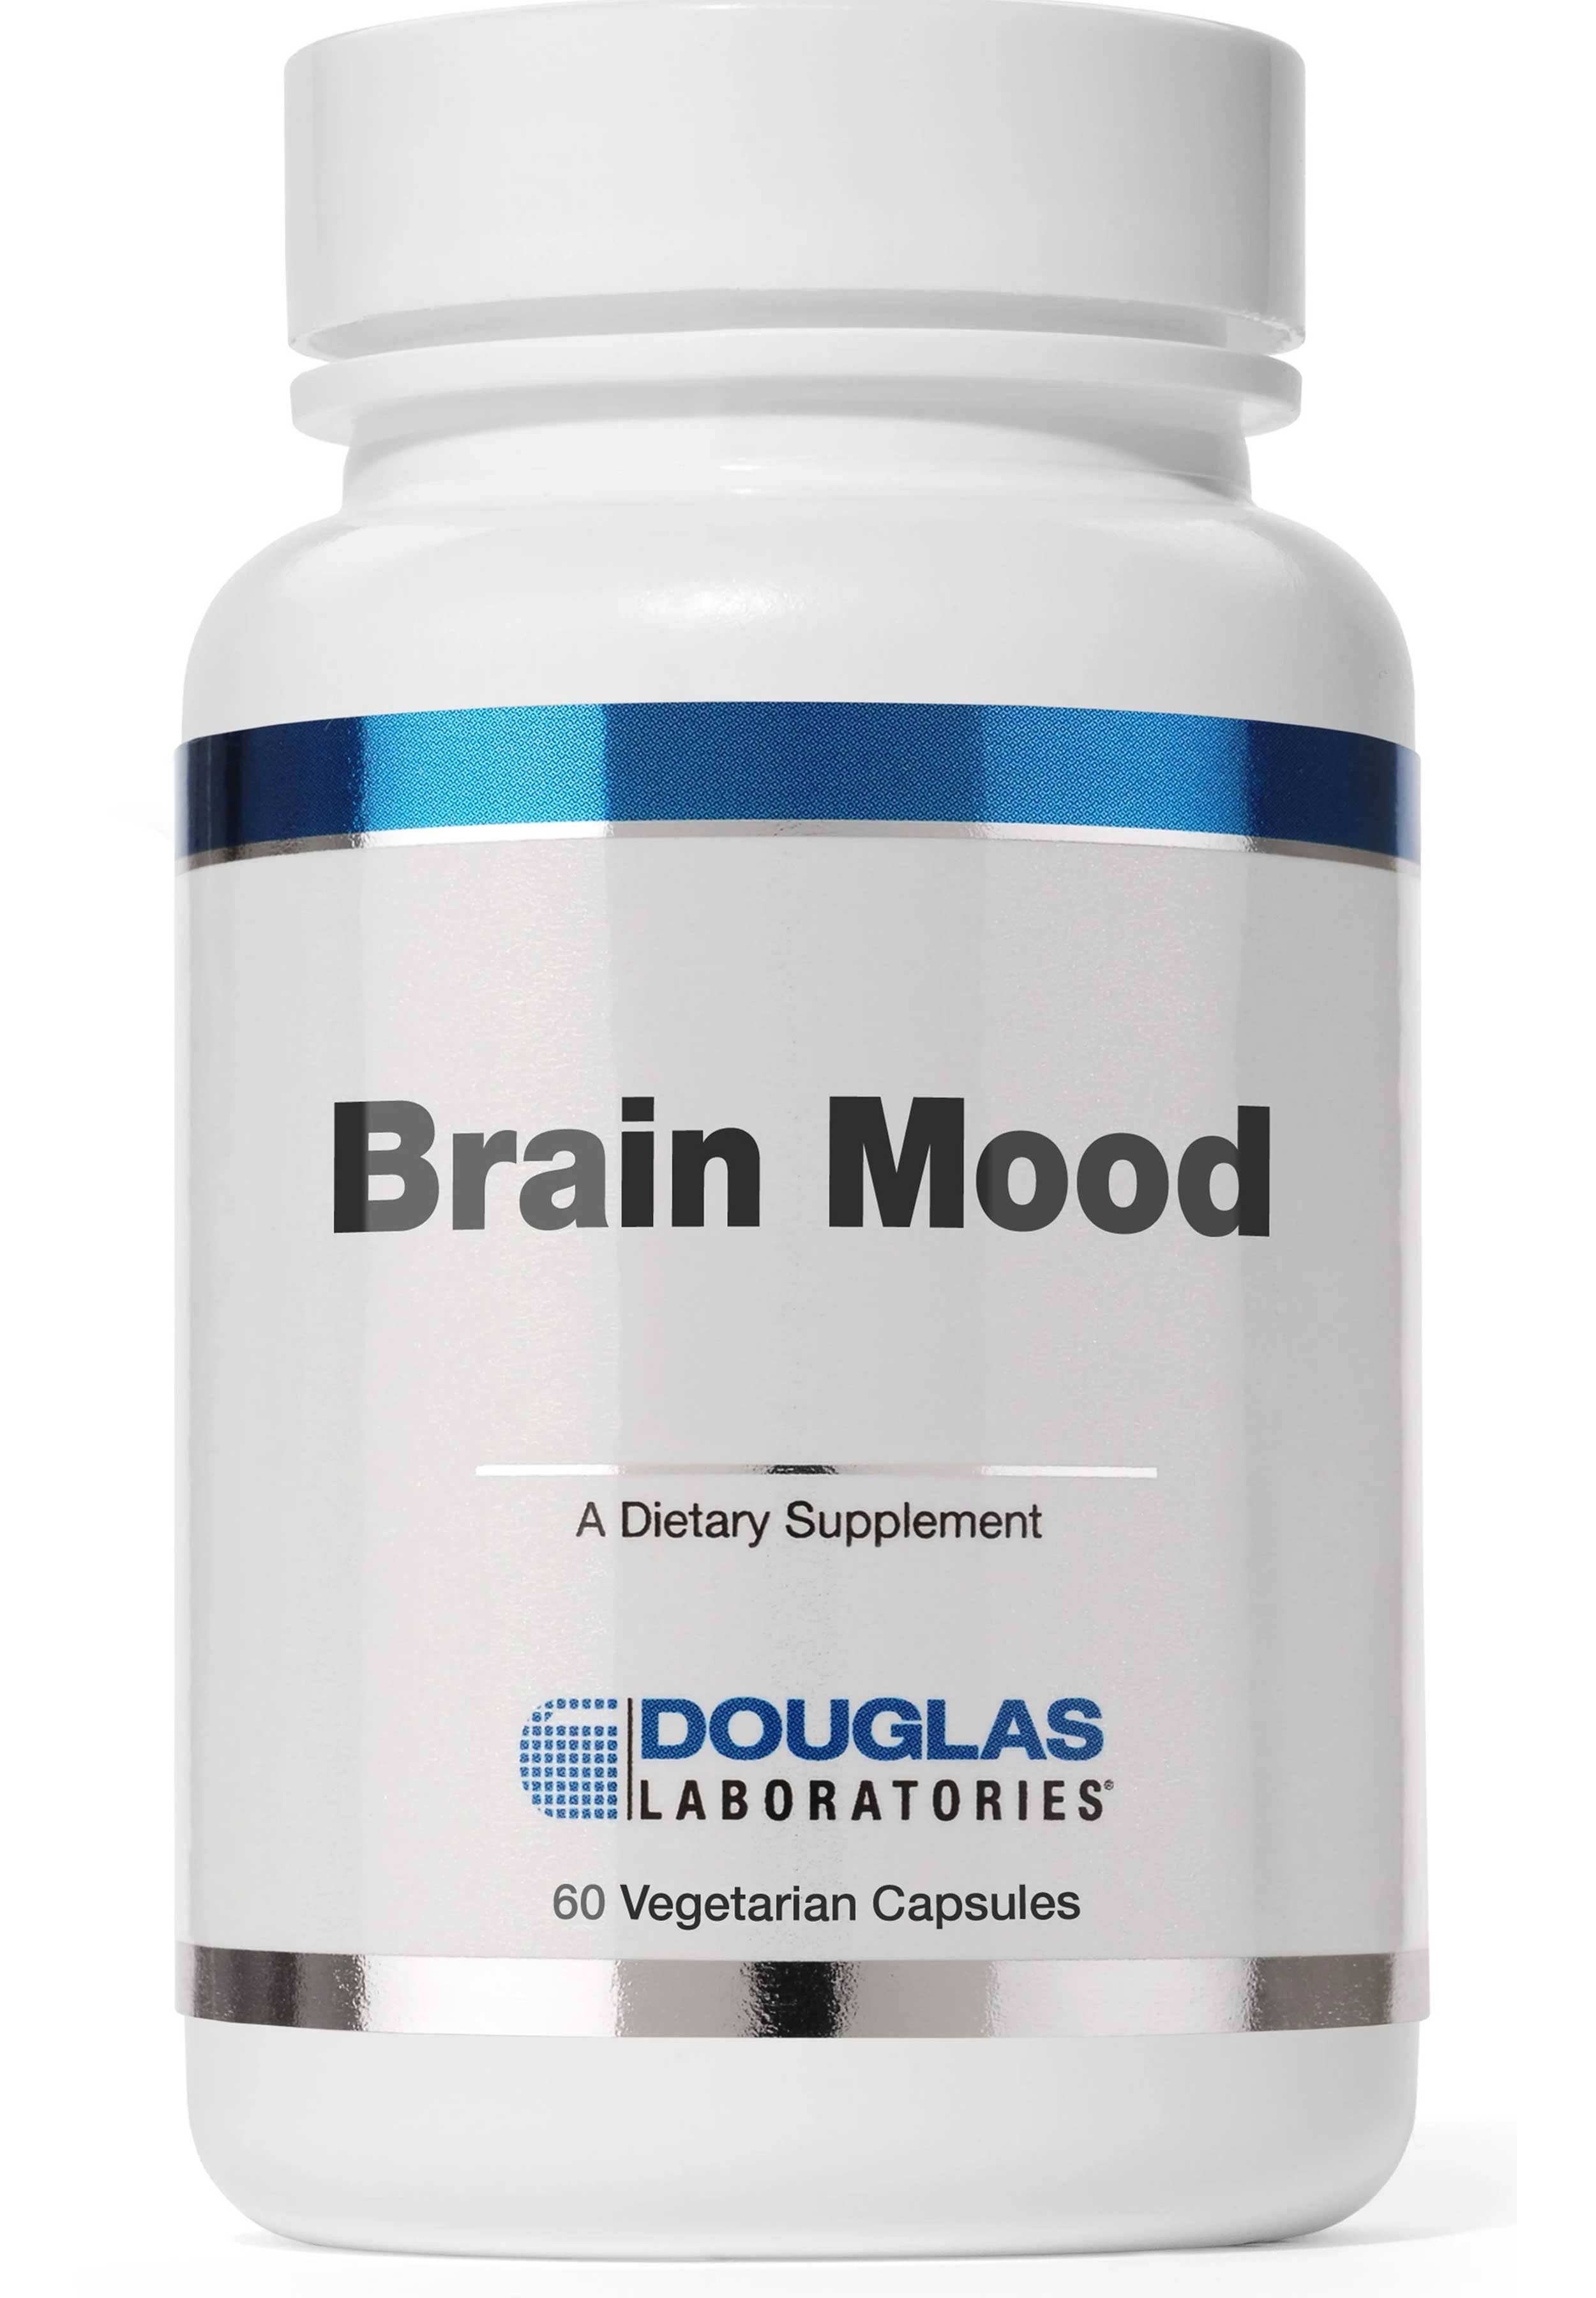 Douglas Laboratories Brain Mood Dietary Supplement - 60 Vegetarian Capsules